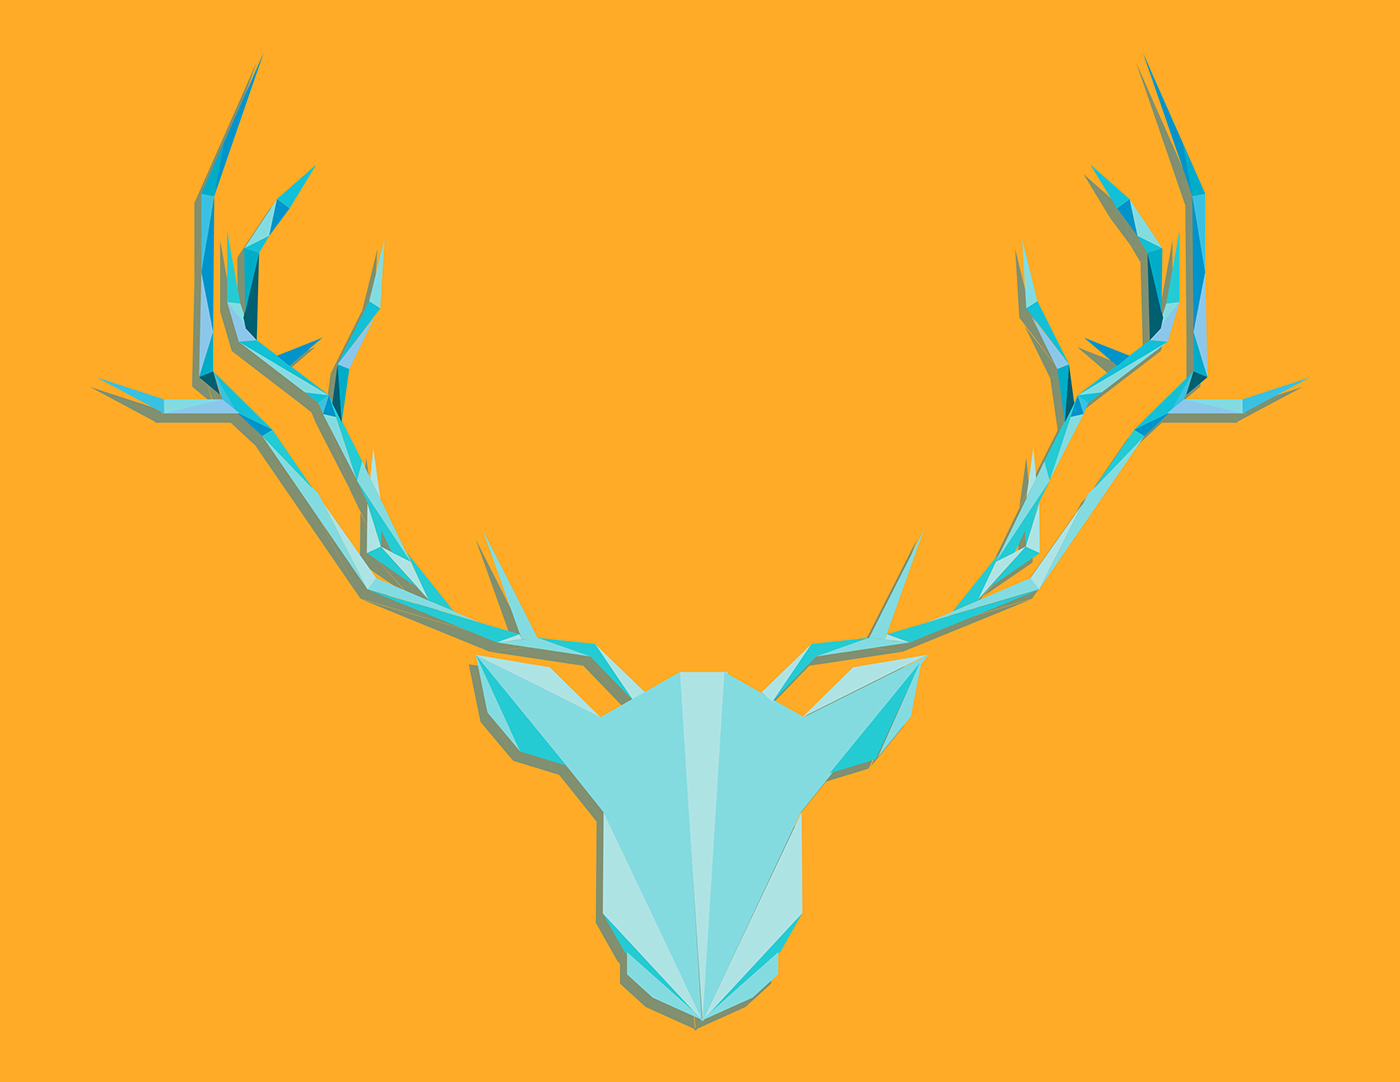 geometric geometric animals design posters digital poster Printing colors FOX elephant bee deer